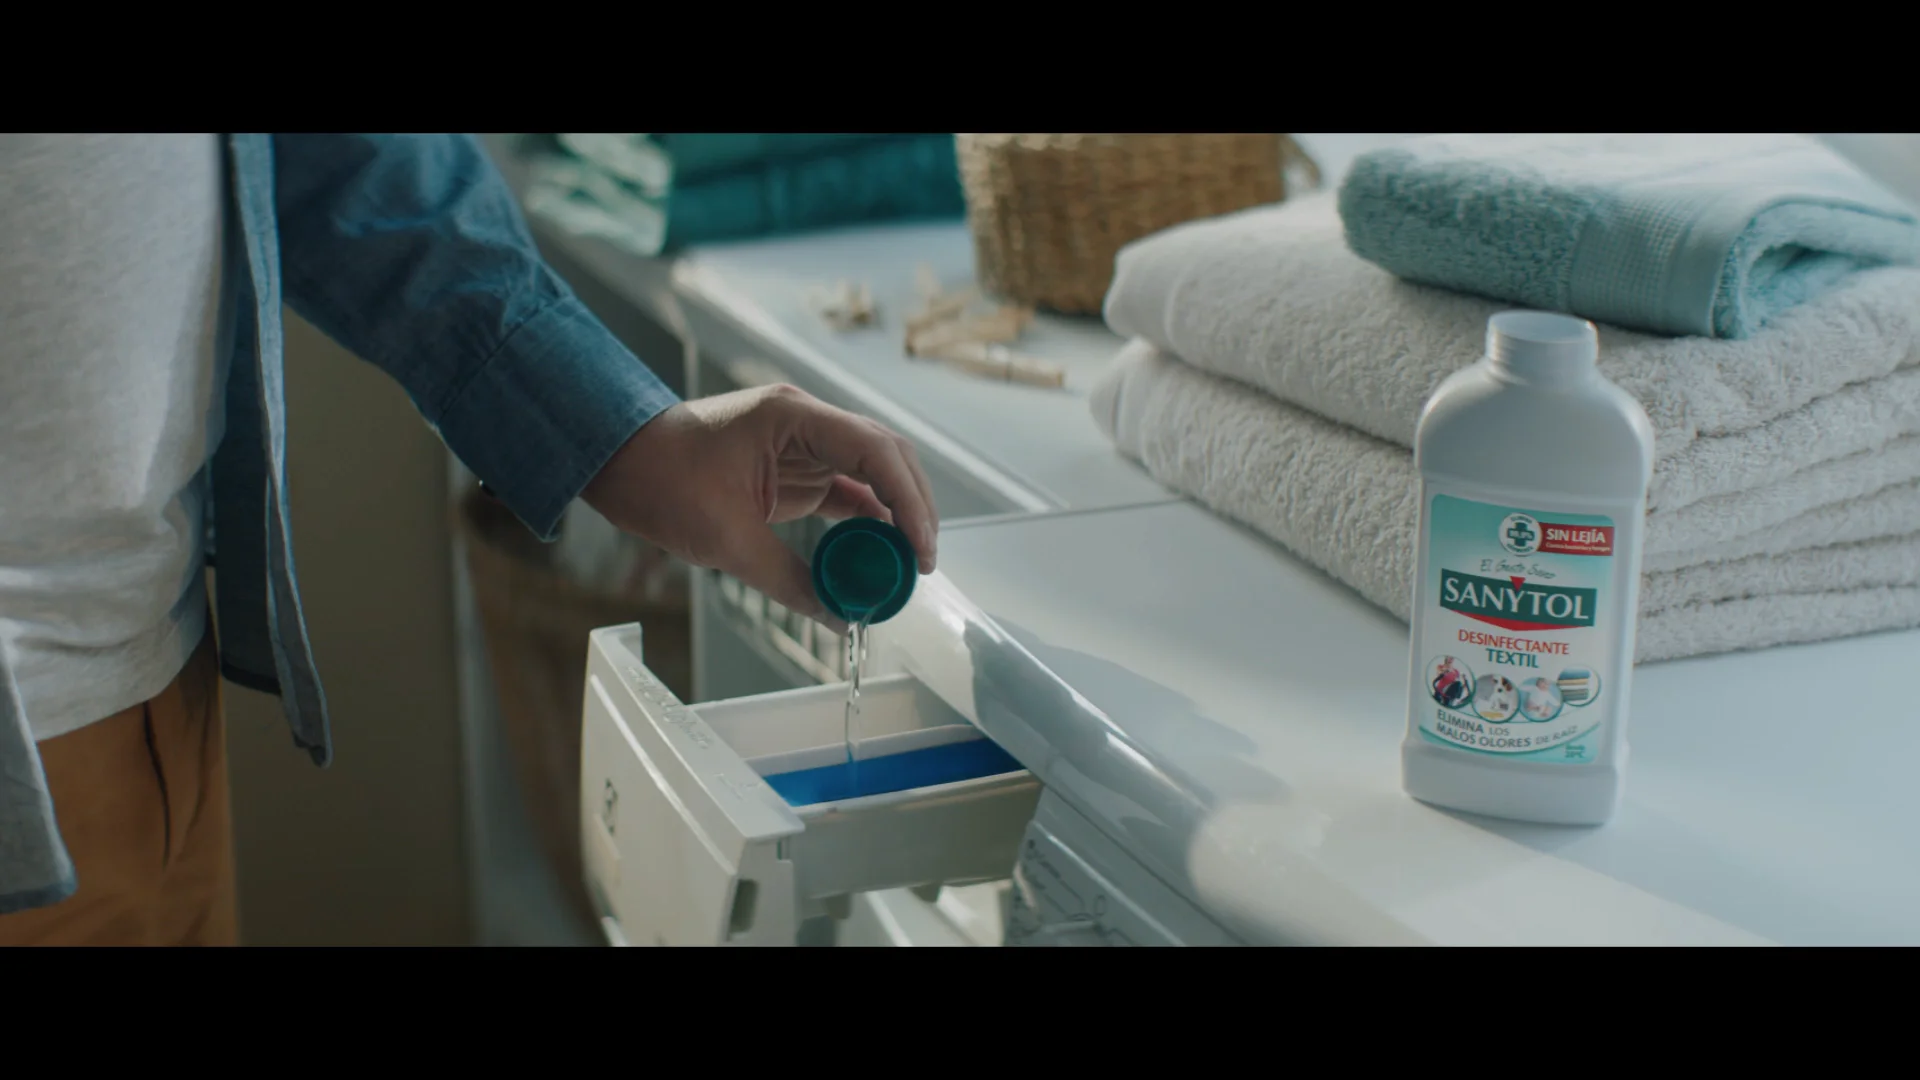 SANYTOL Desinfectante textil on Vimeo